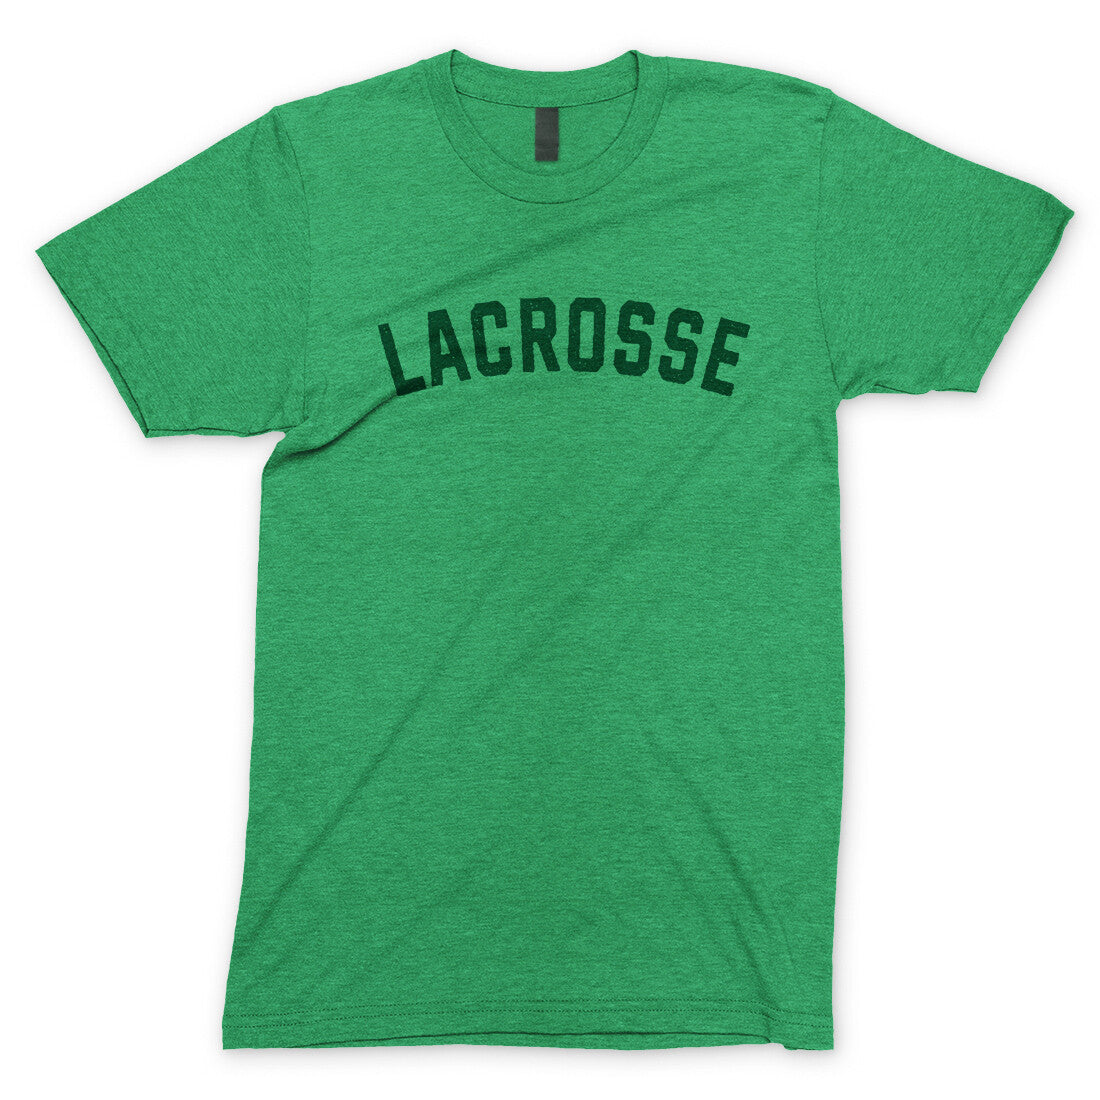 Lacrosse in Heather Irish Green Color